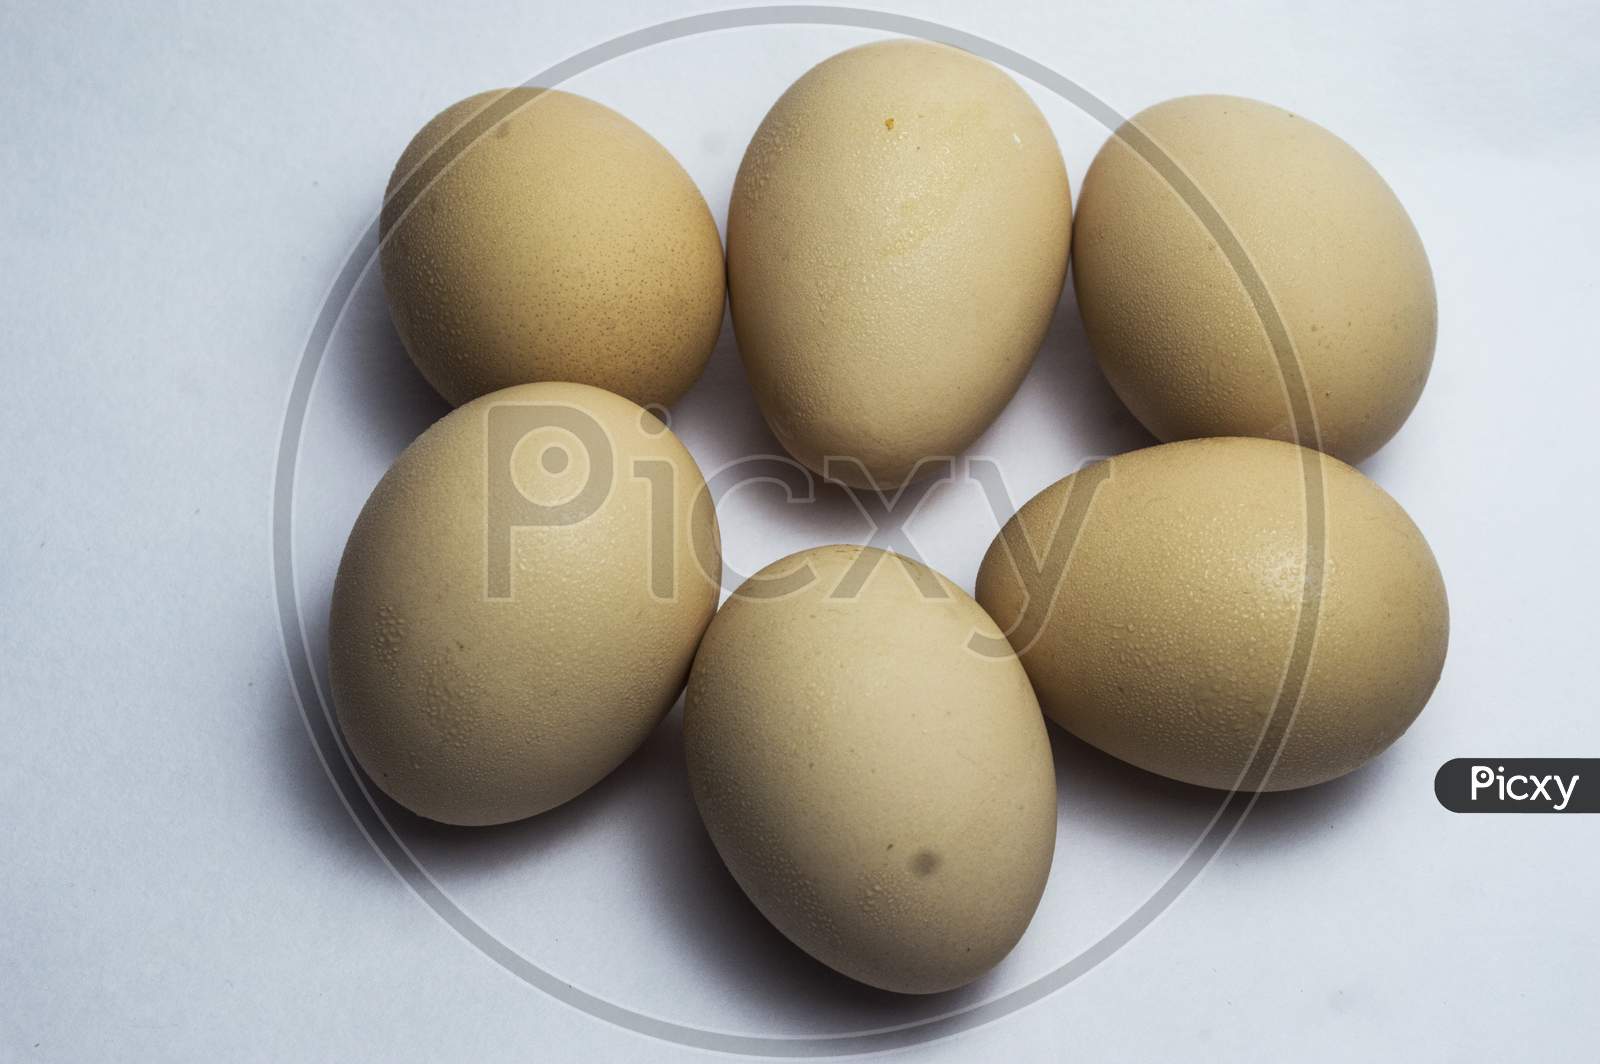 Organic hen eggs